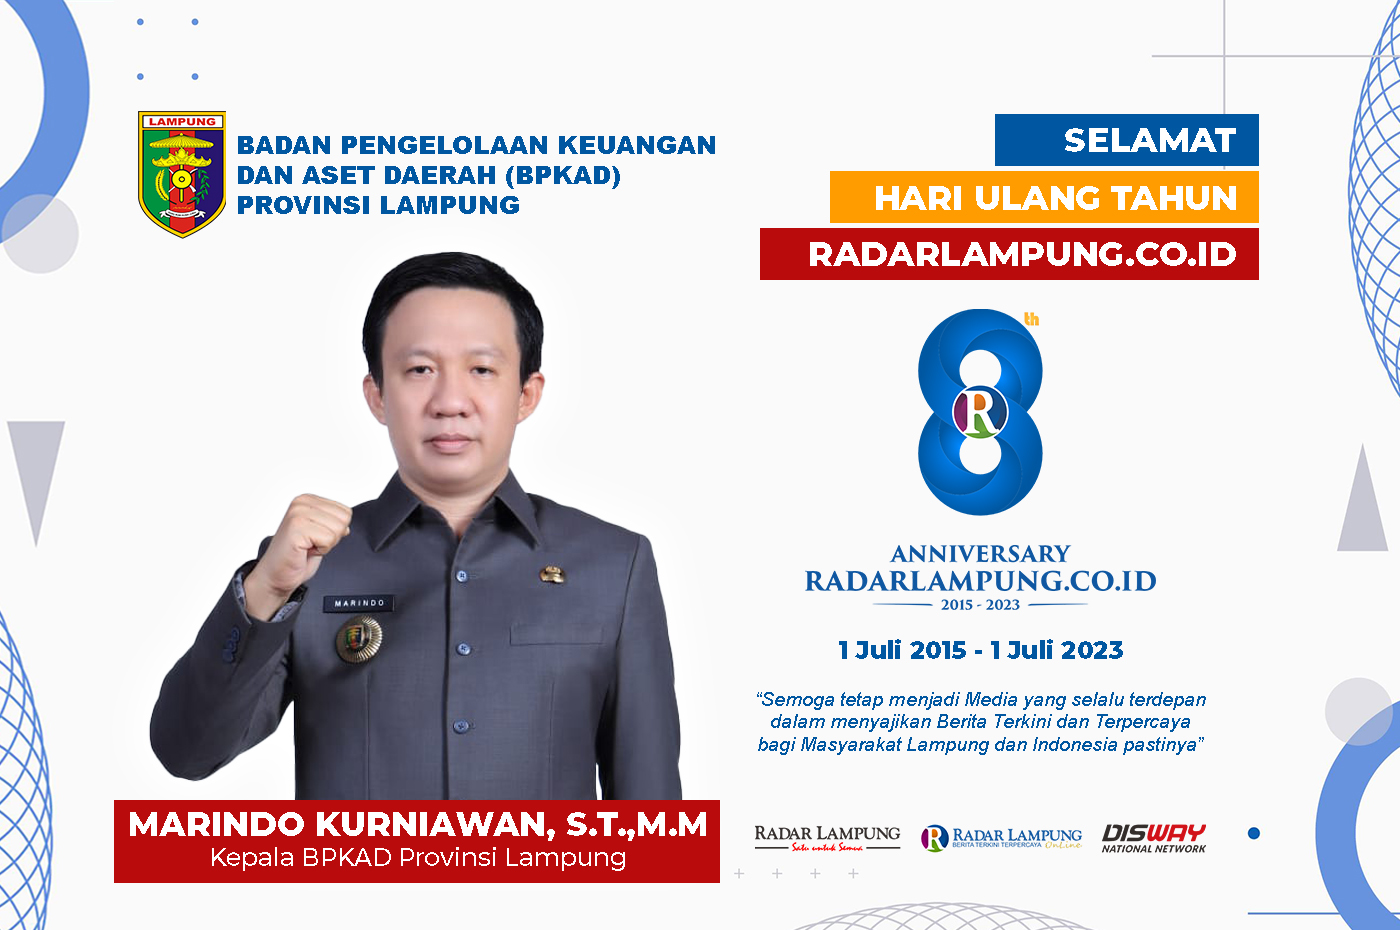 BPKAD Provinsi Lampung: Selamat Ulang Tahun Radar Lampung Online ke-8